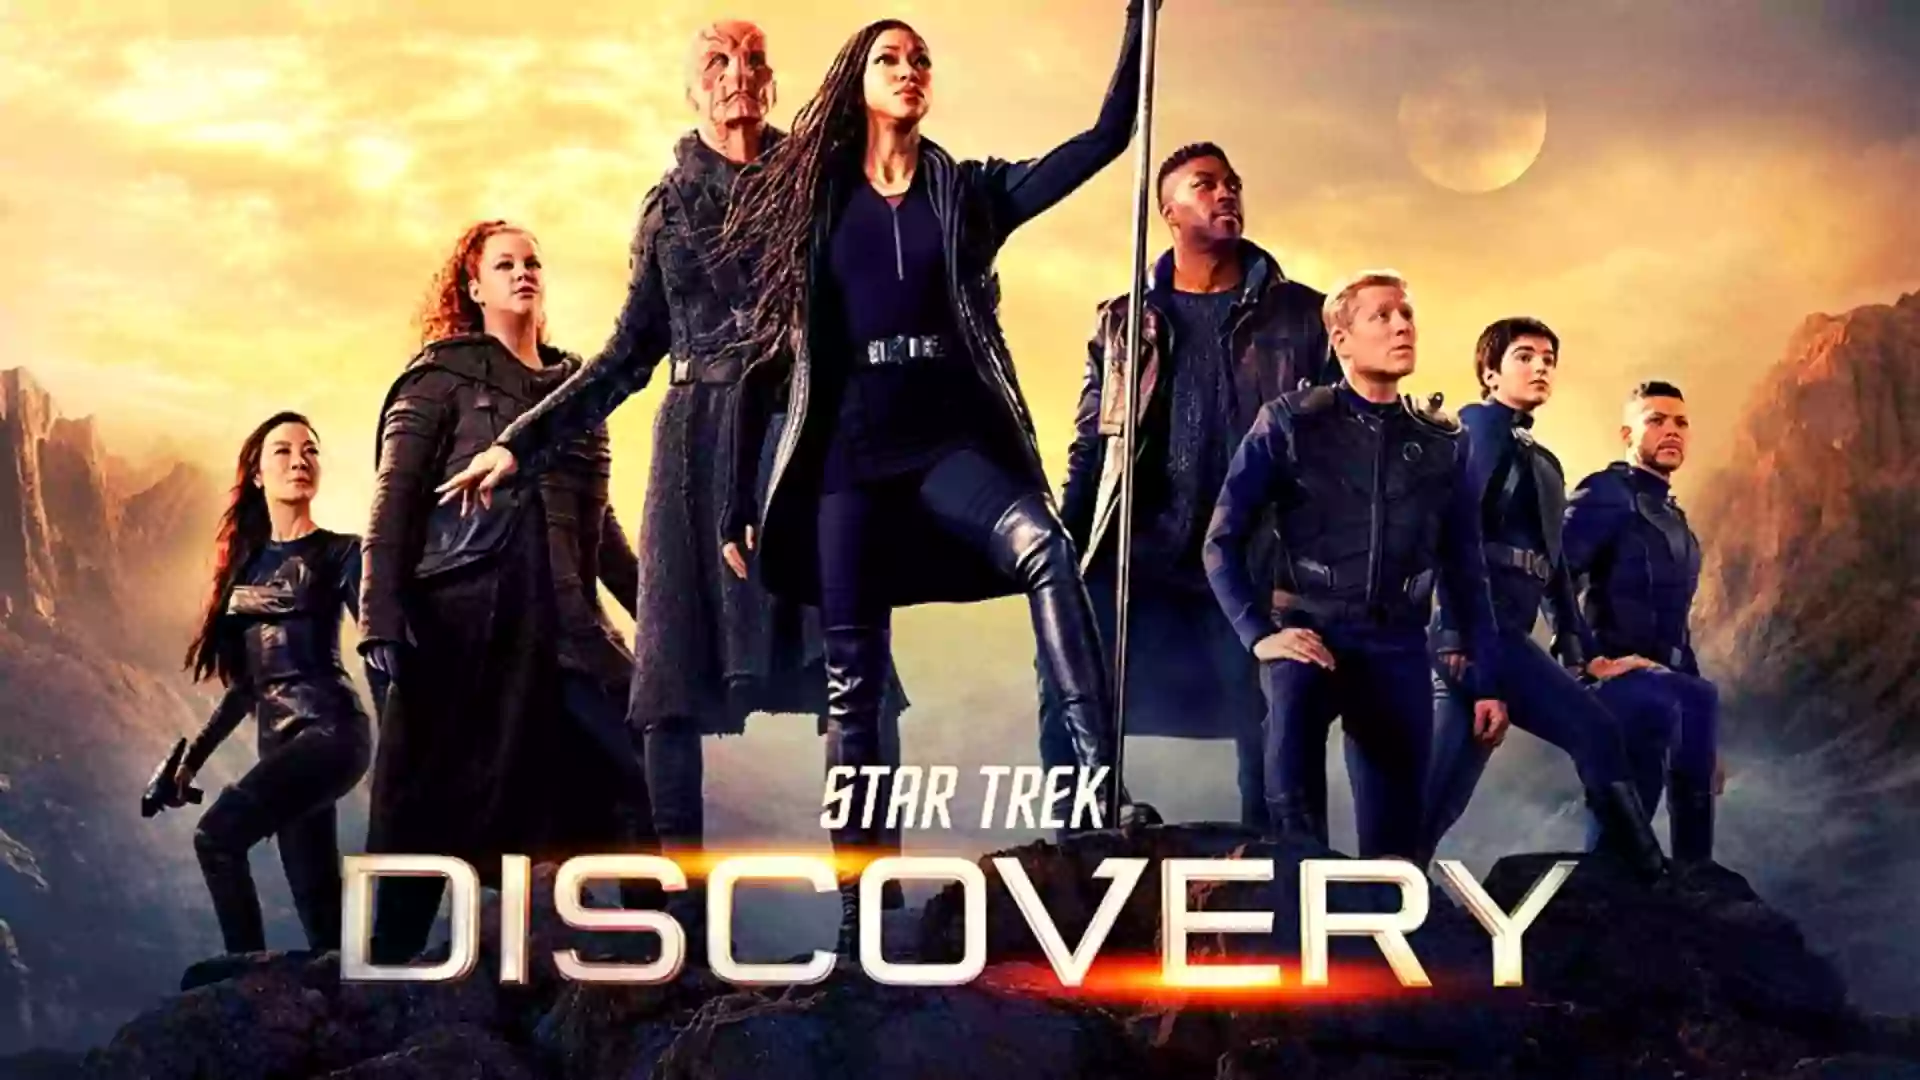 Star Trek Discovery Season 1 Cast